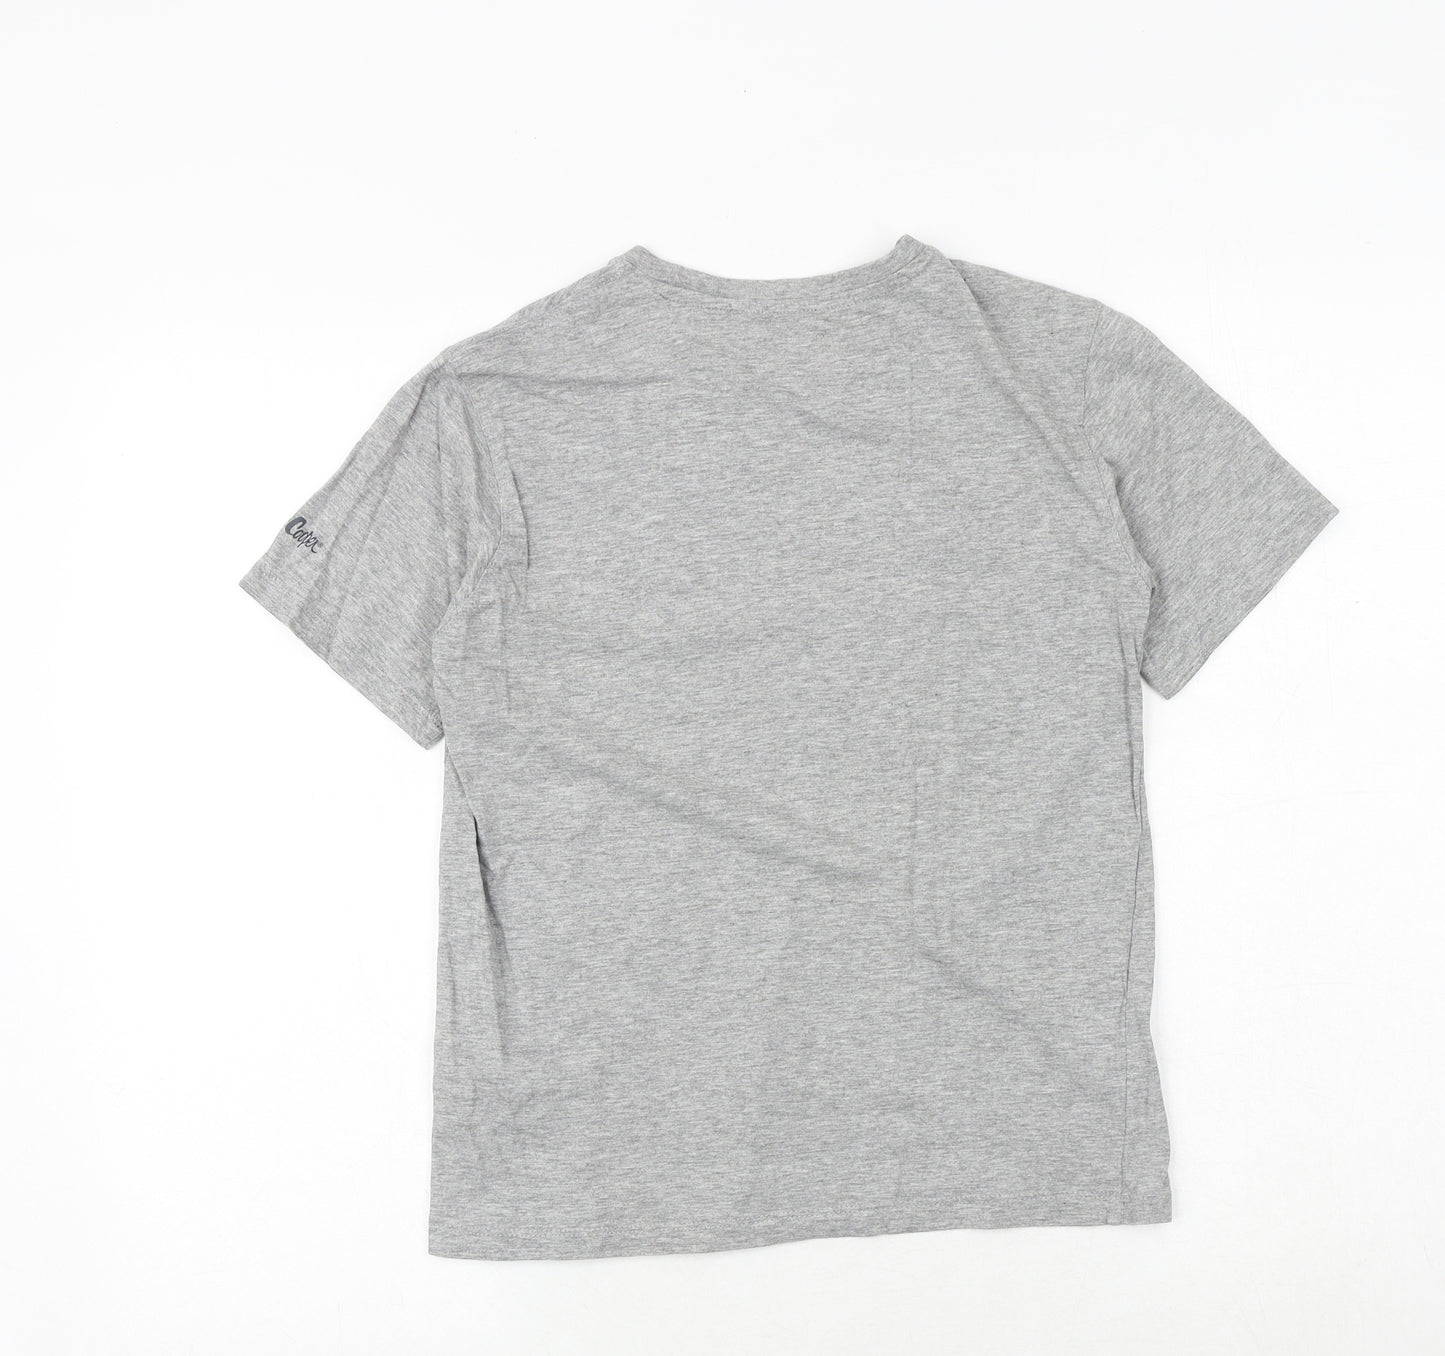 Lee Cooper Boys Grey Cotton Basic T-Shirt Size XL Crew Neck Pullover